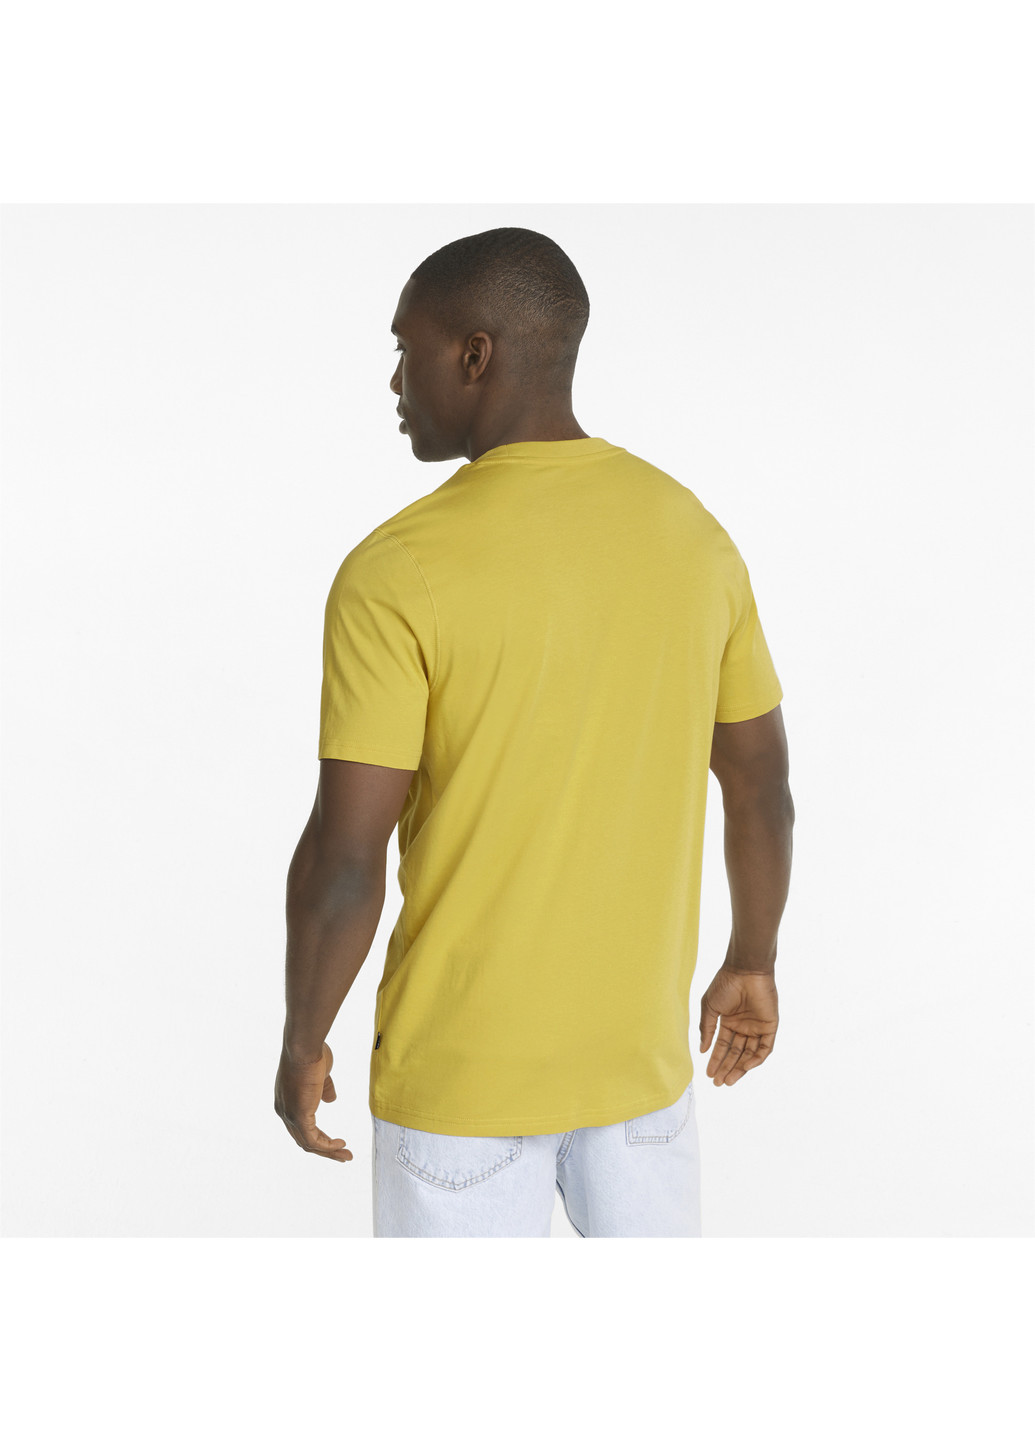 Жовта футболка modern basics pocket men's tee Puma